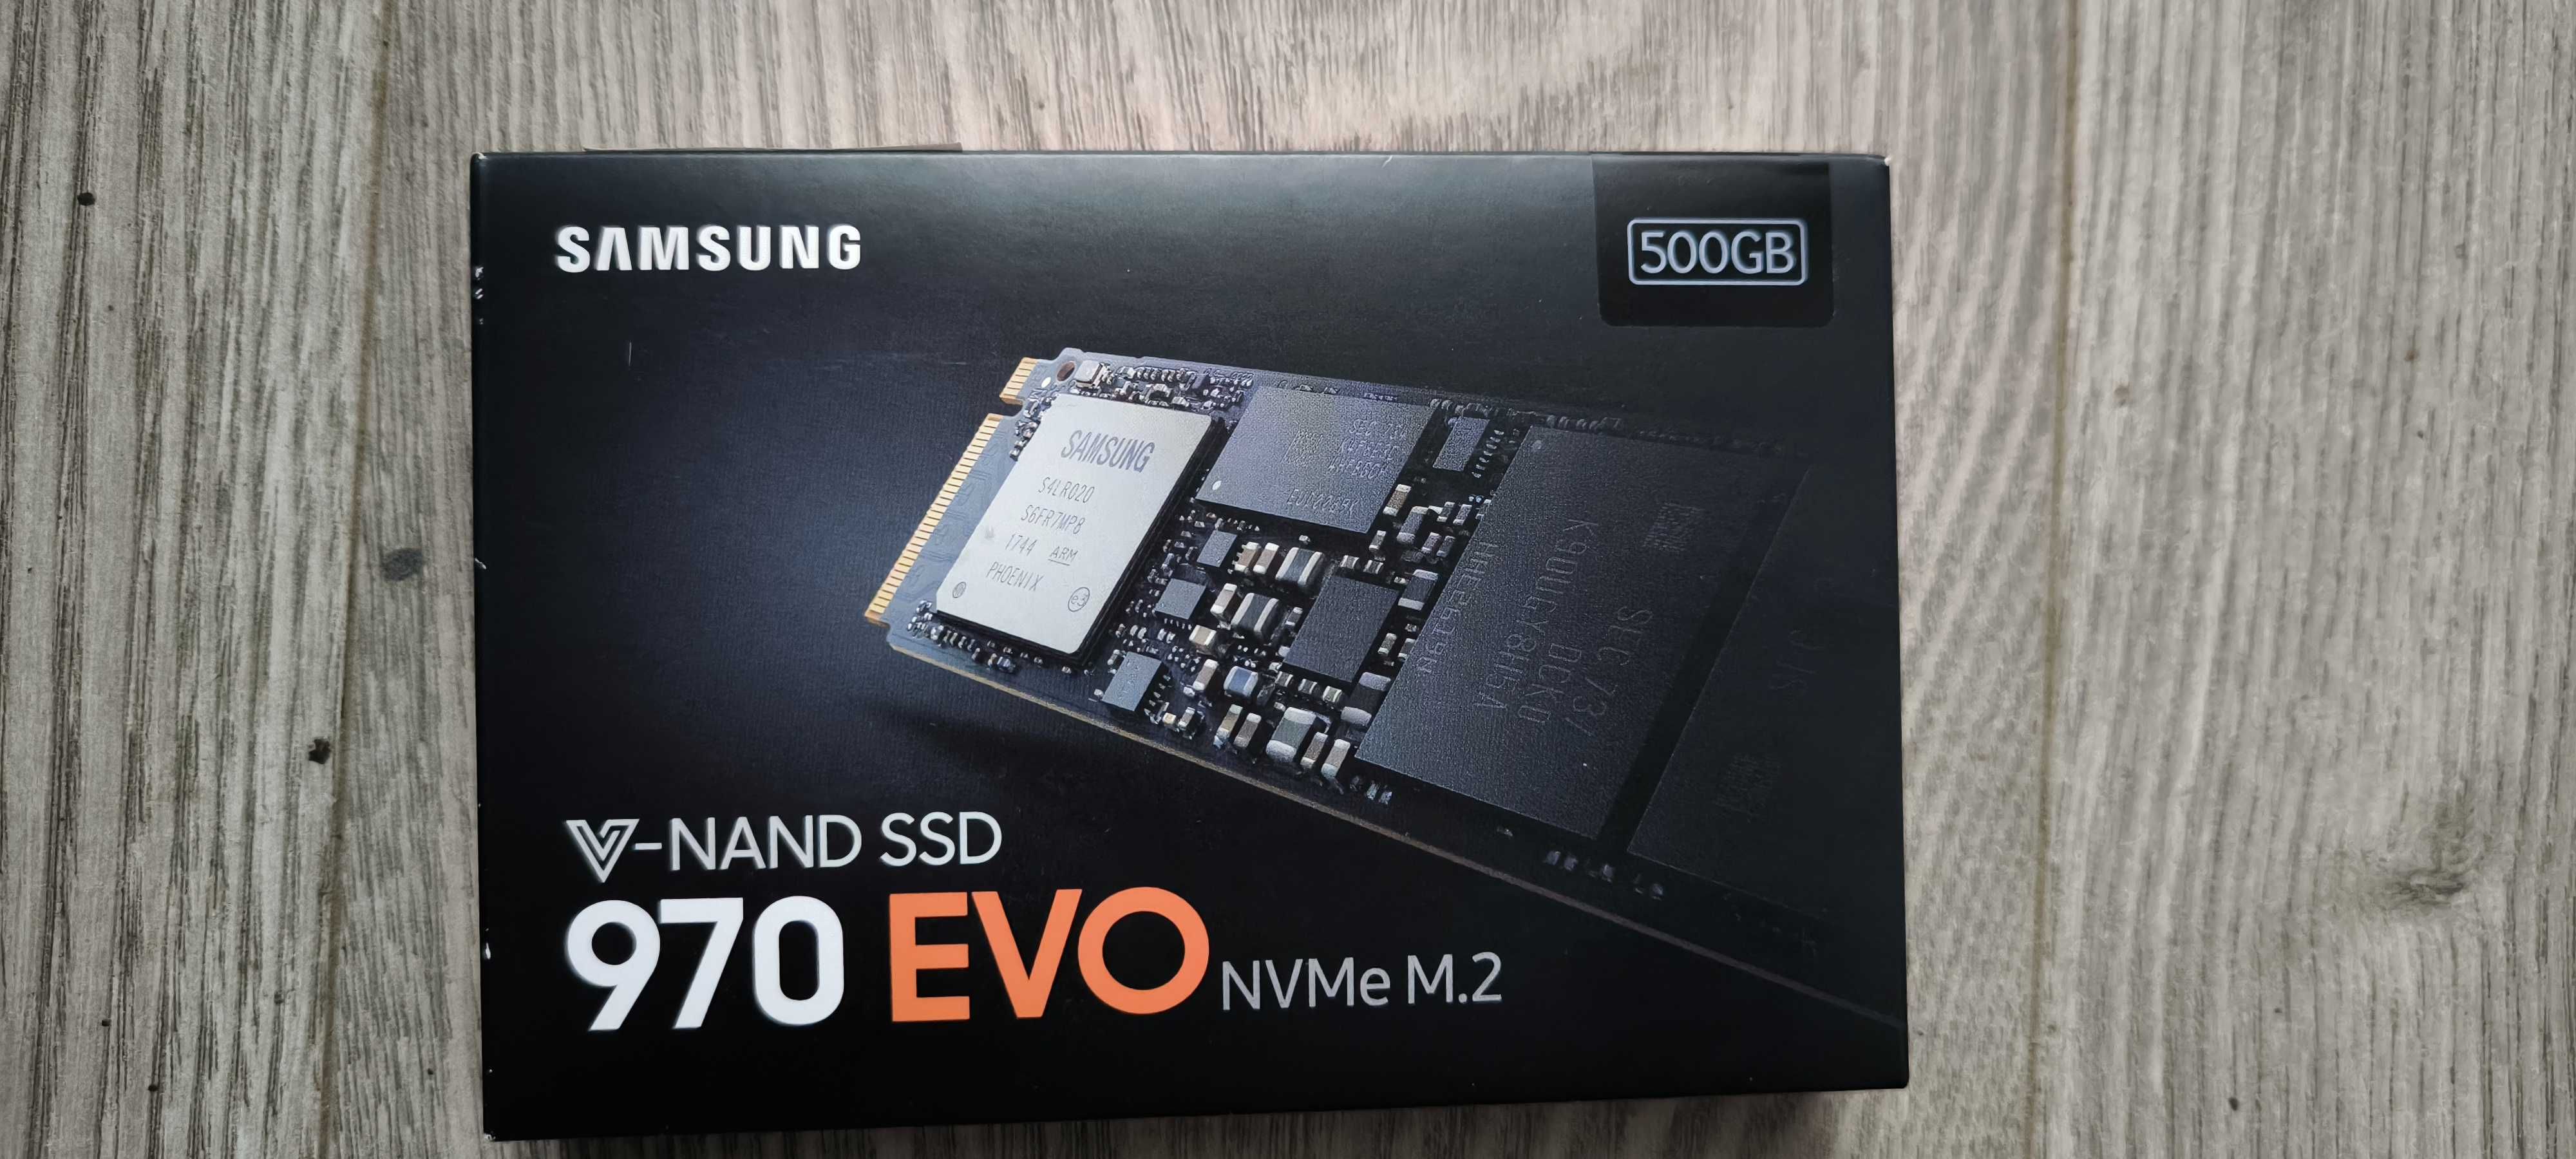 Samsung 970 Evo 500 GB NVMe M.2 SSD